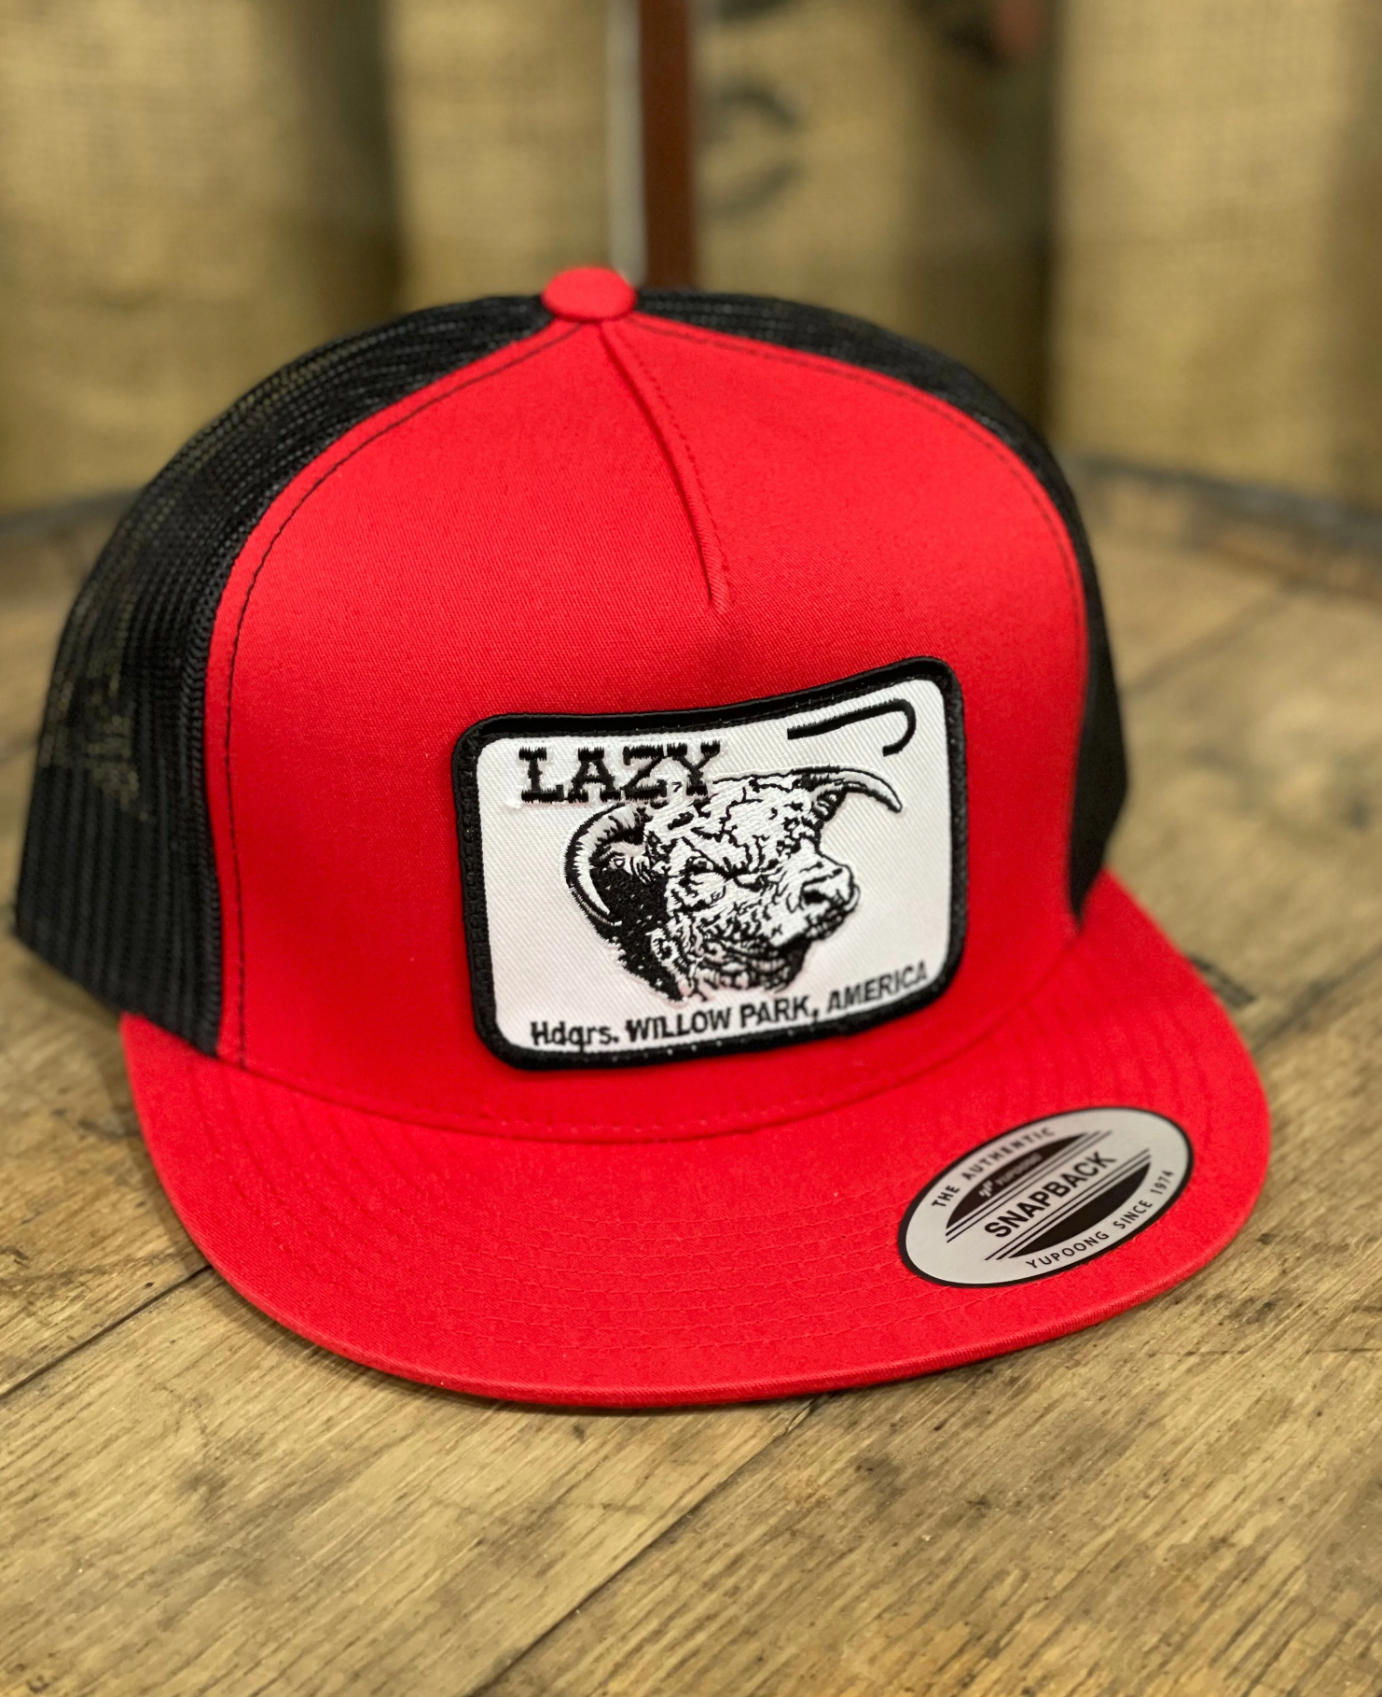 Lazy J Ranch Wear Red & Black Cattle Headquarters Cap